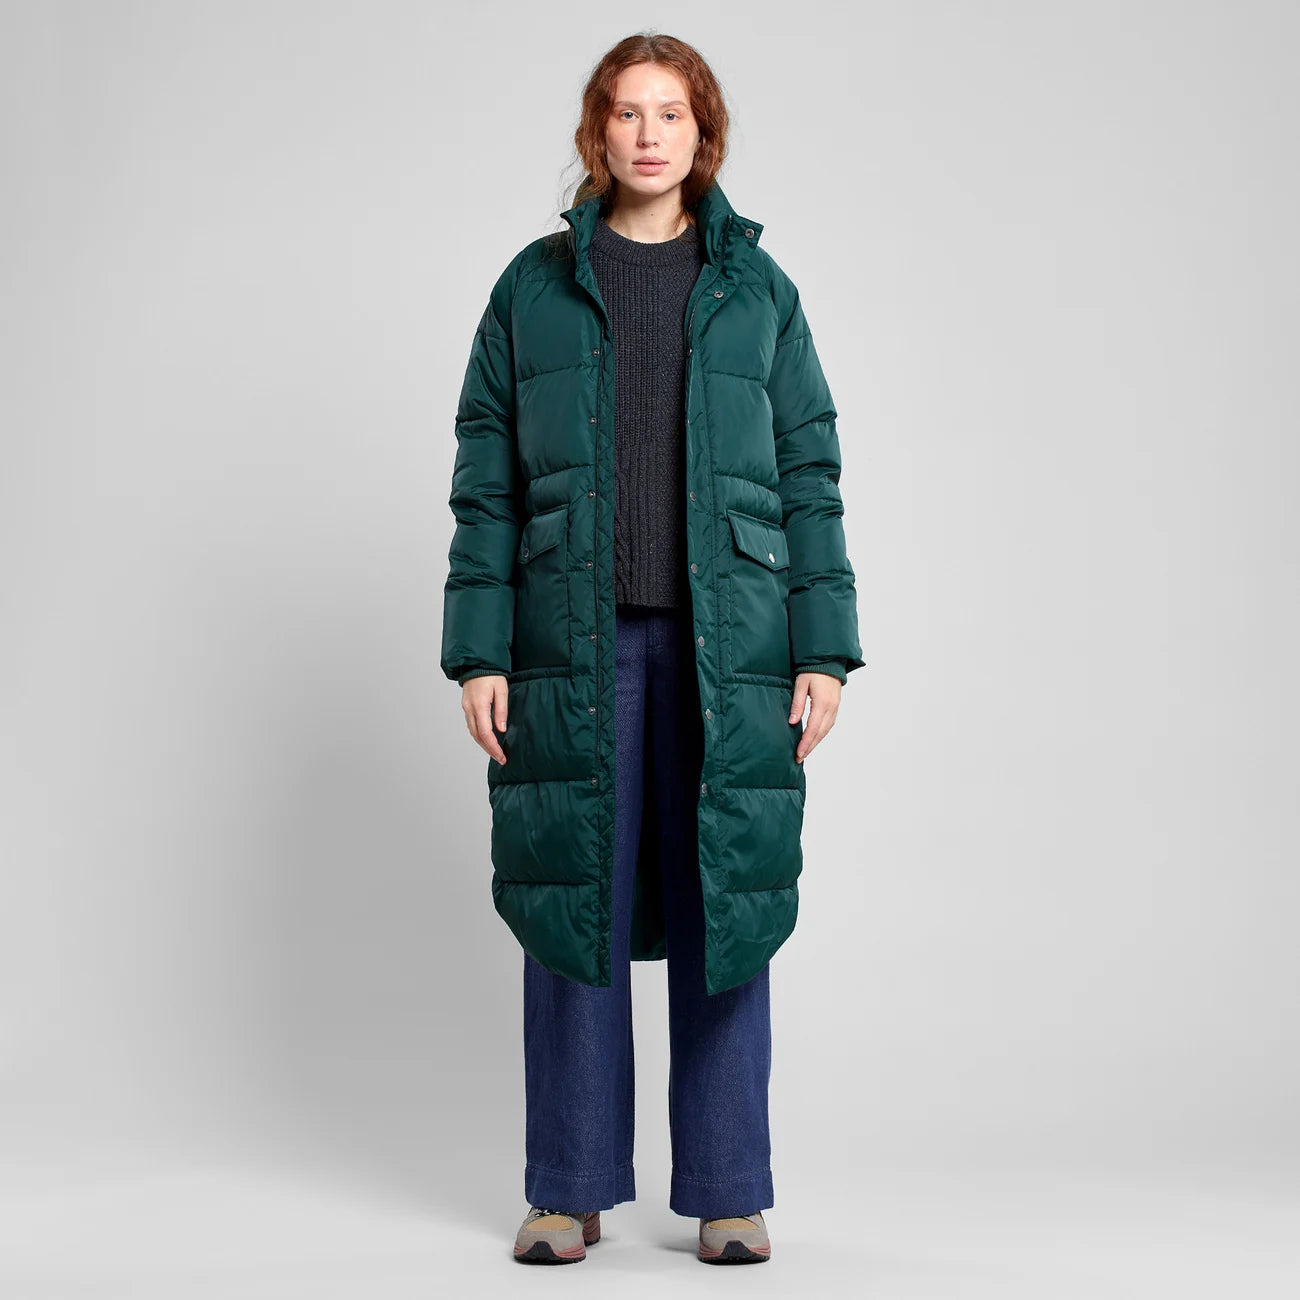 Puffer winter coat in Pine Green